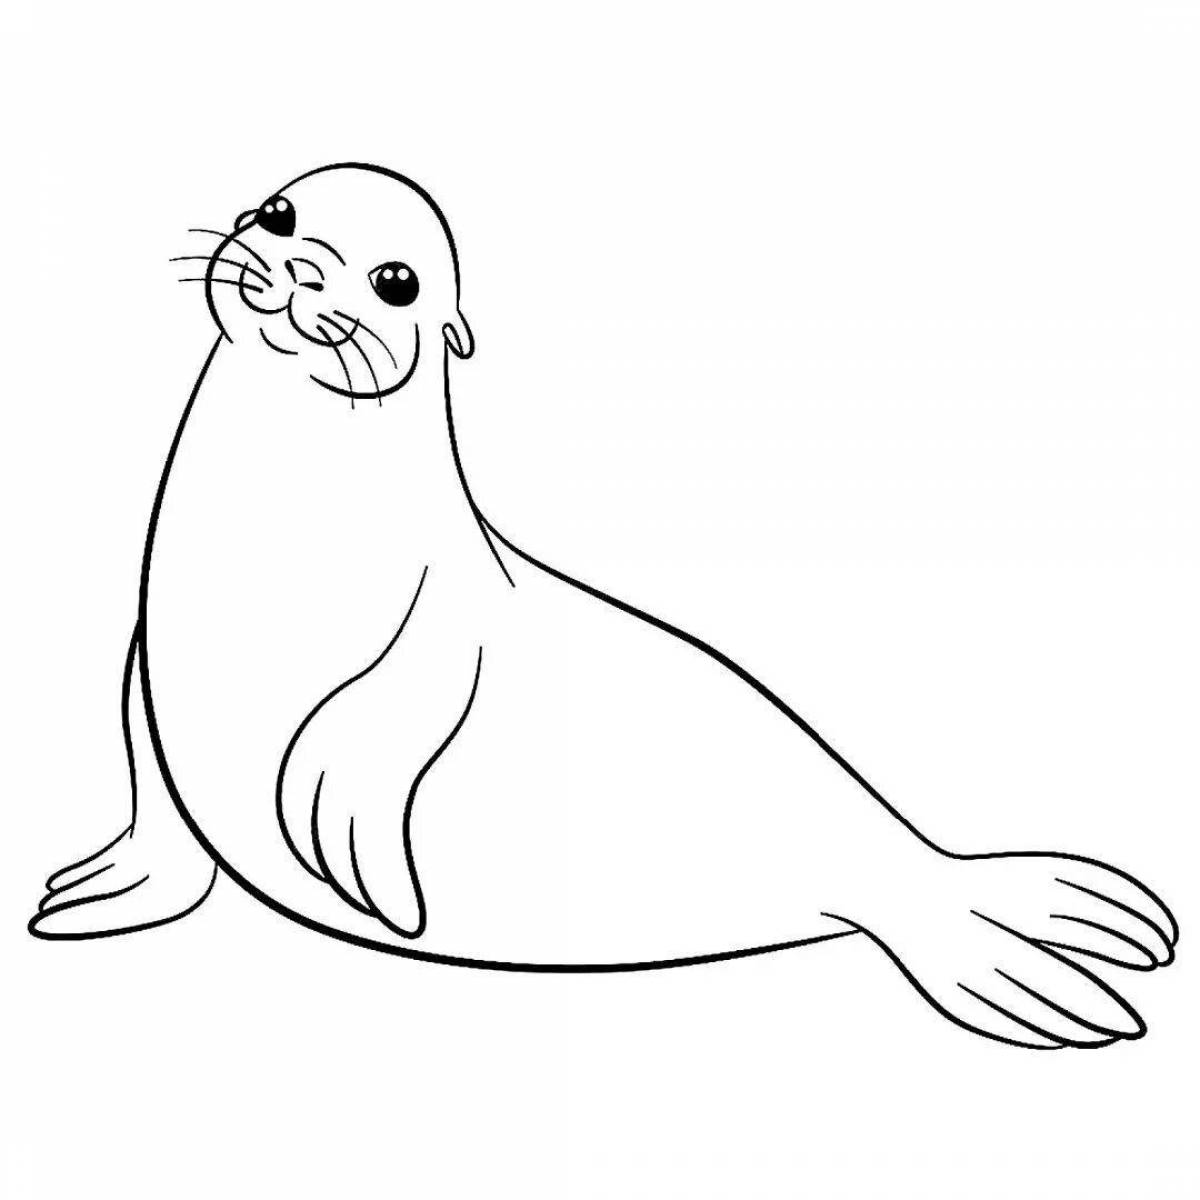 Inspirational Baikal seal coloring book for kids